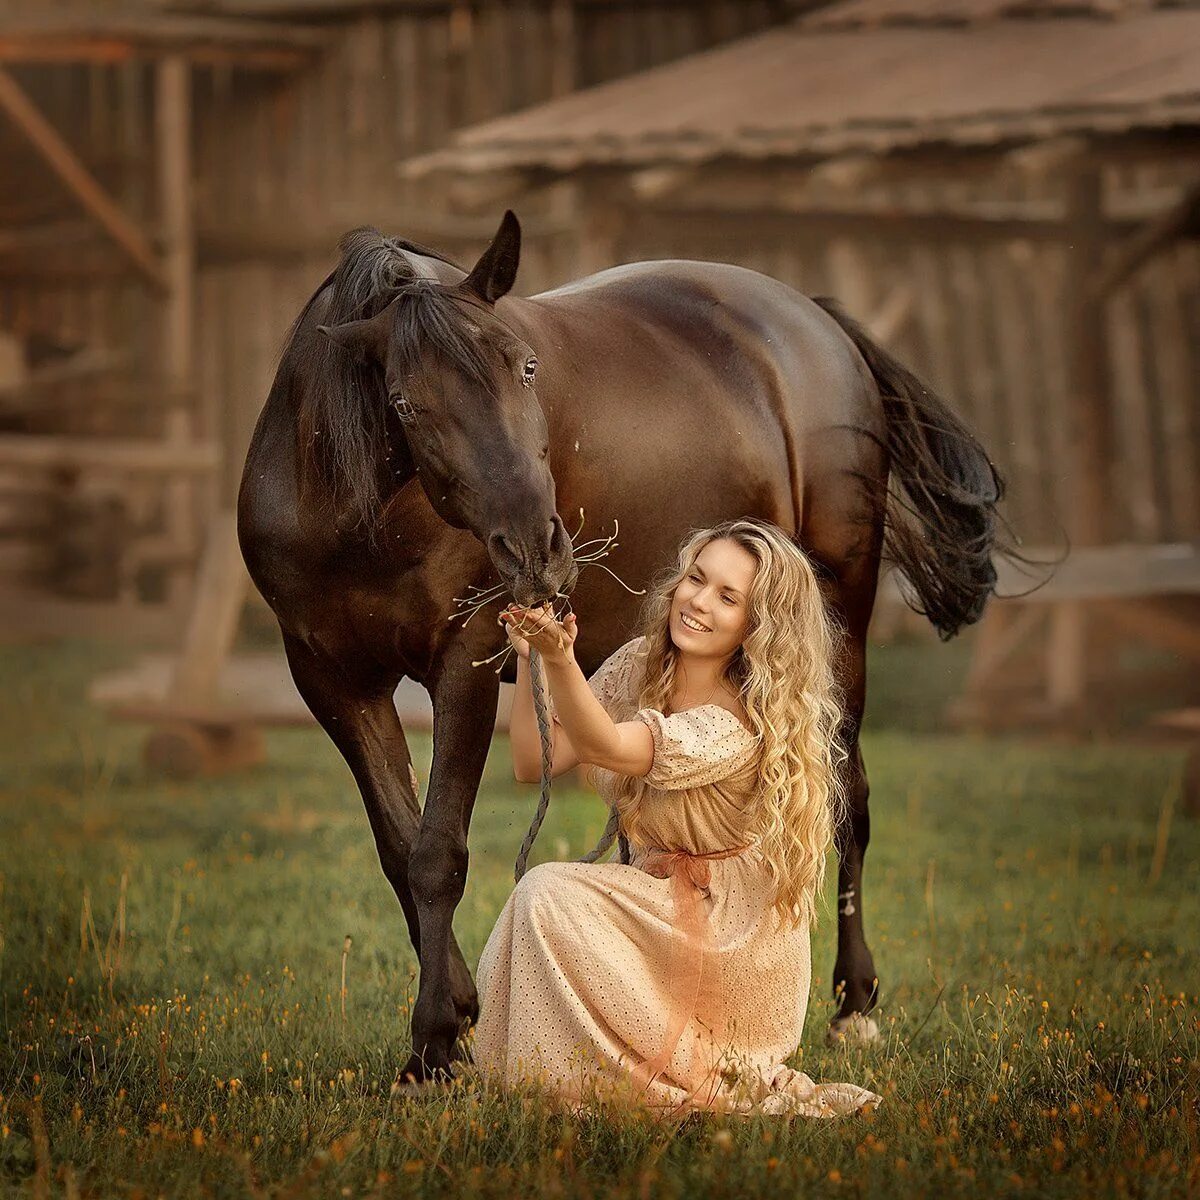 Девки и лошади. Фотосессия с лошадьми. Девушка с лошадью. Красивая фотосессия с лошадью. Тематические фотосессии с лошадьми.